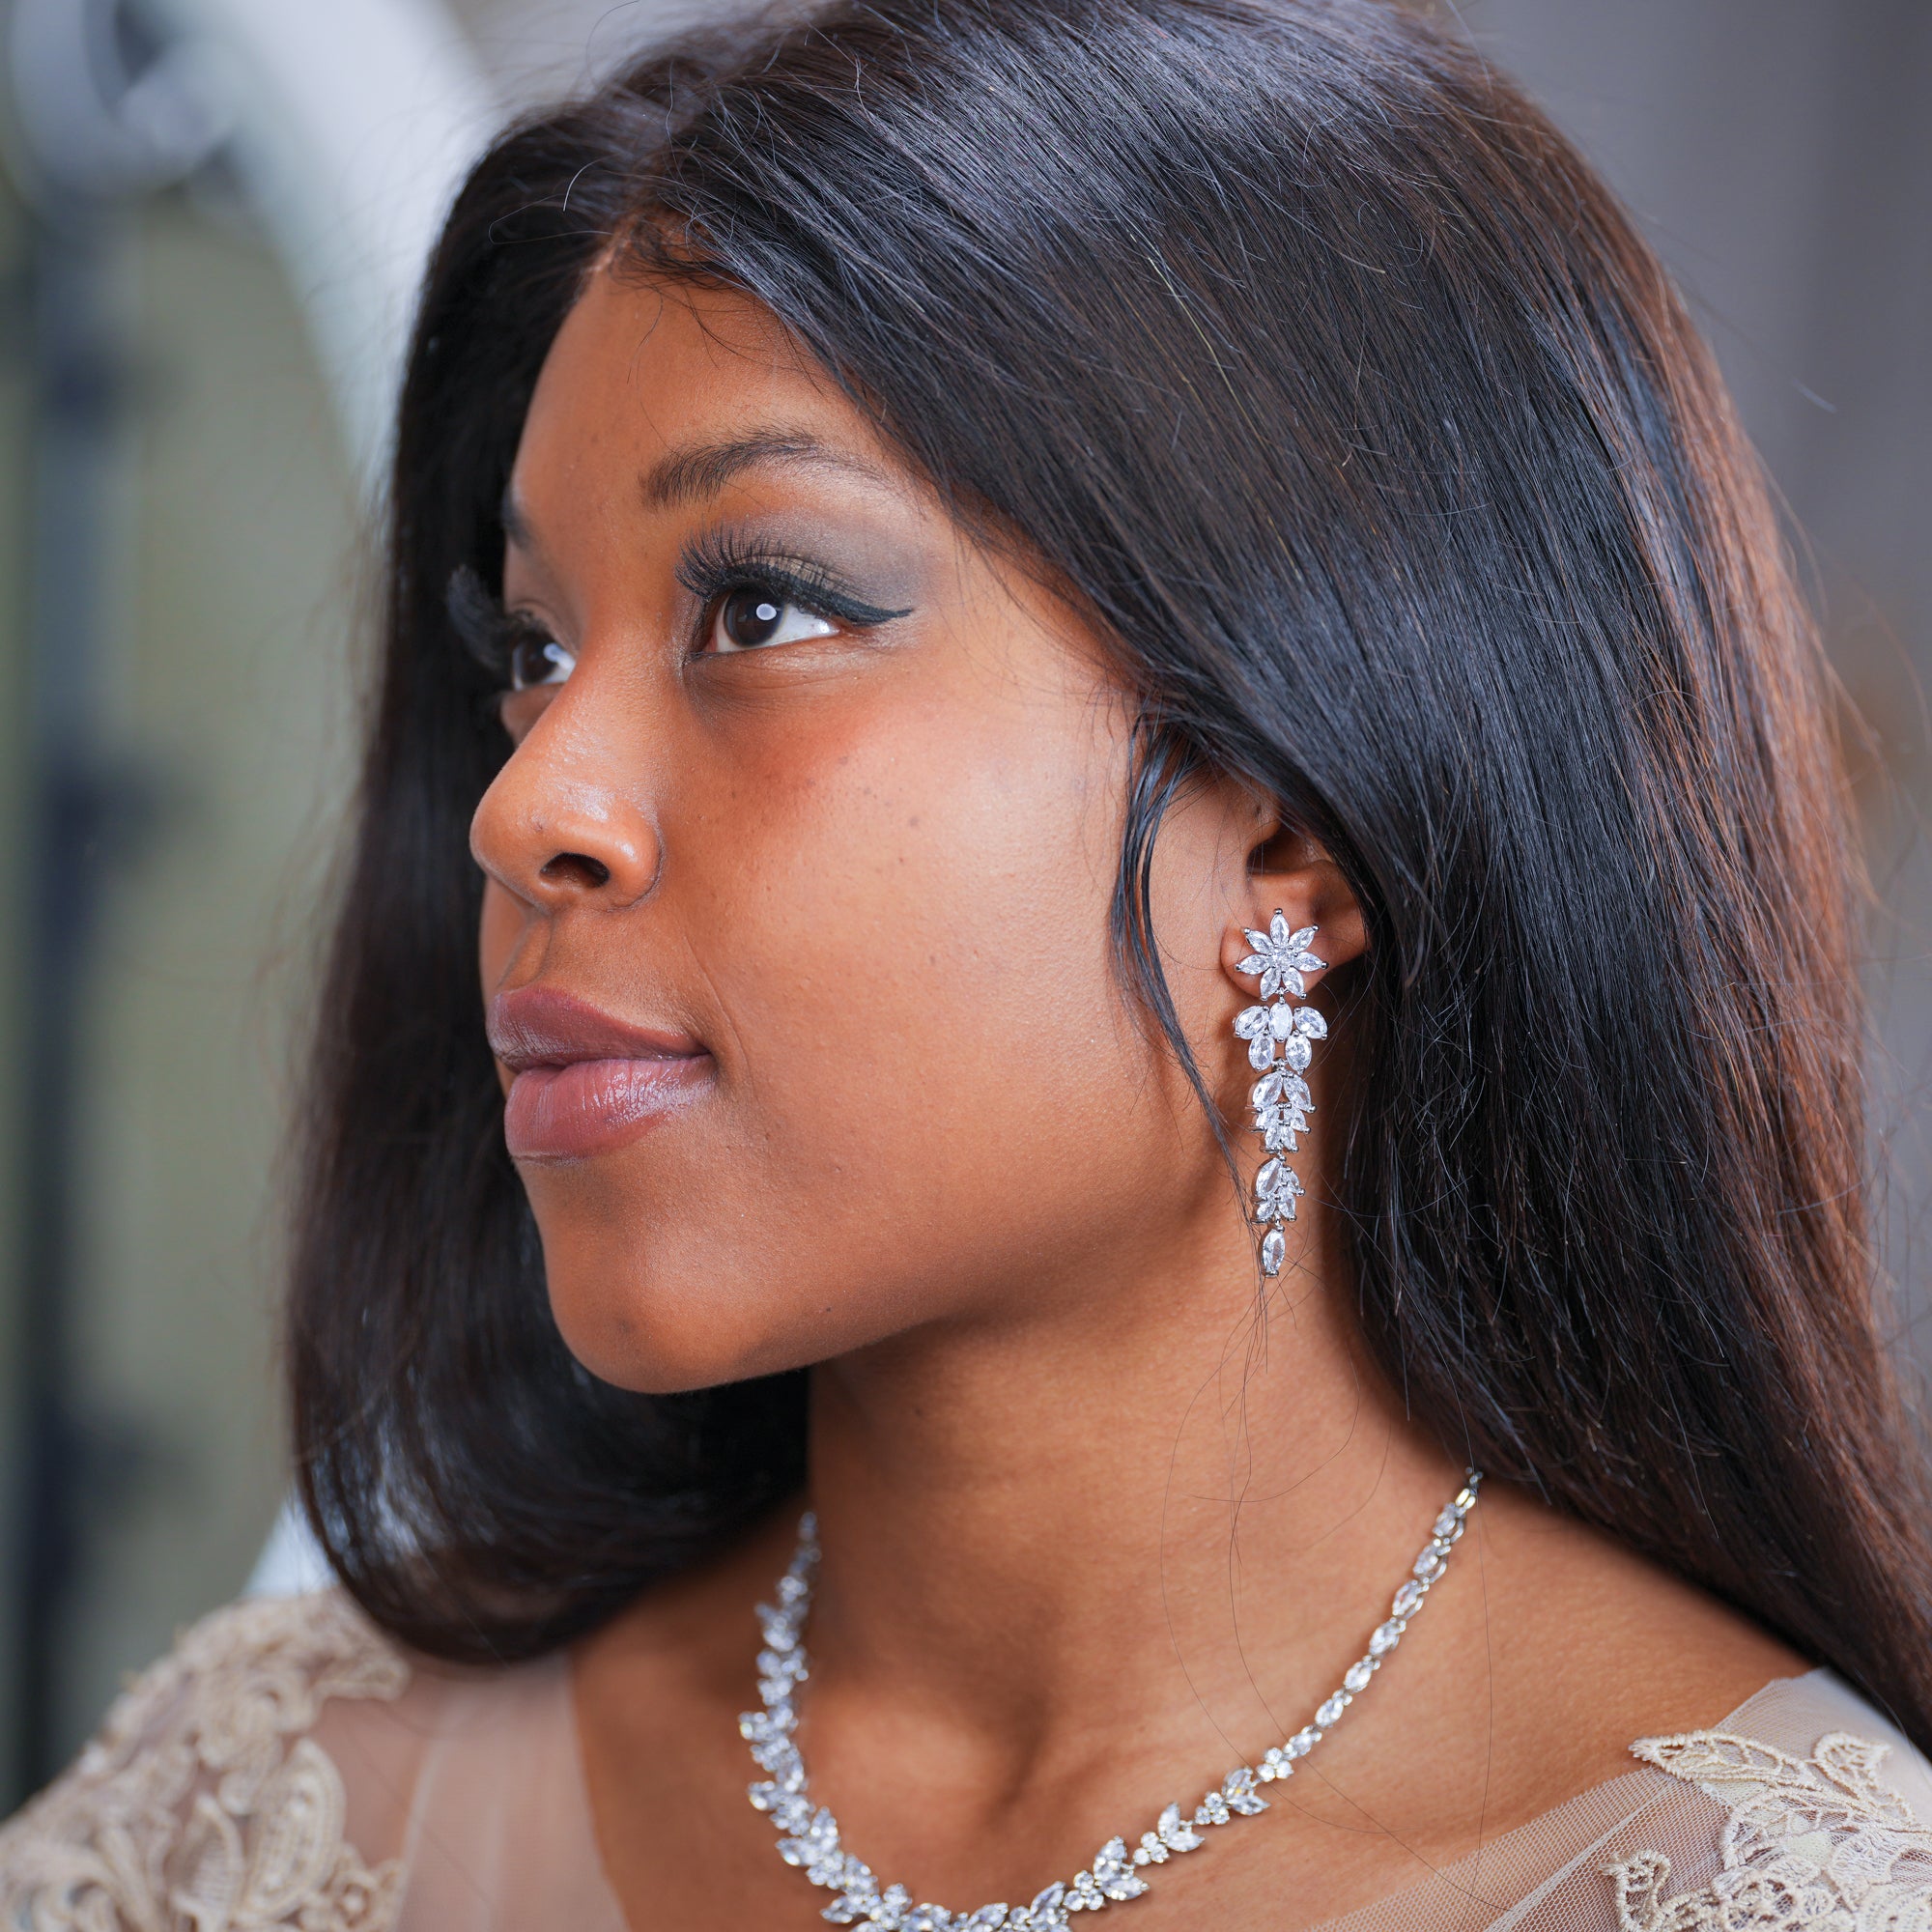 Long Bridal Crystal Earrings - Kimberly